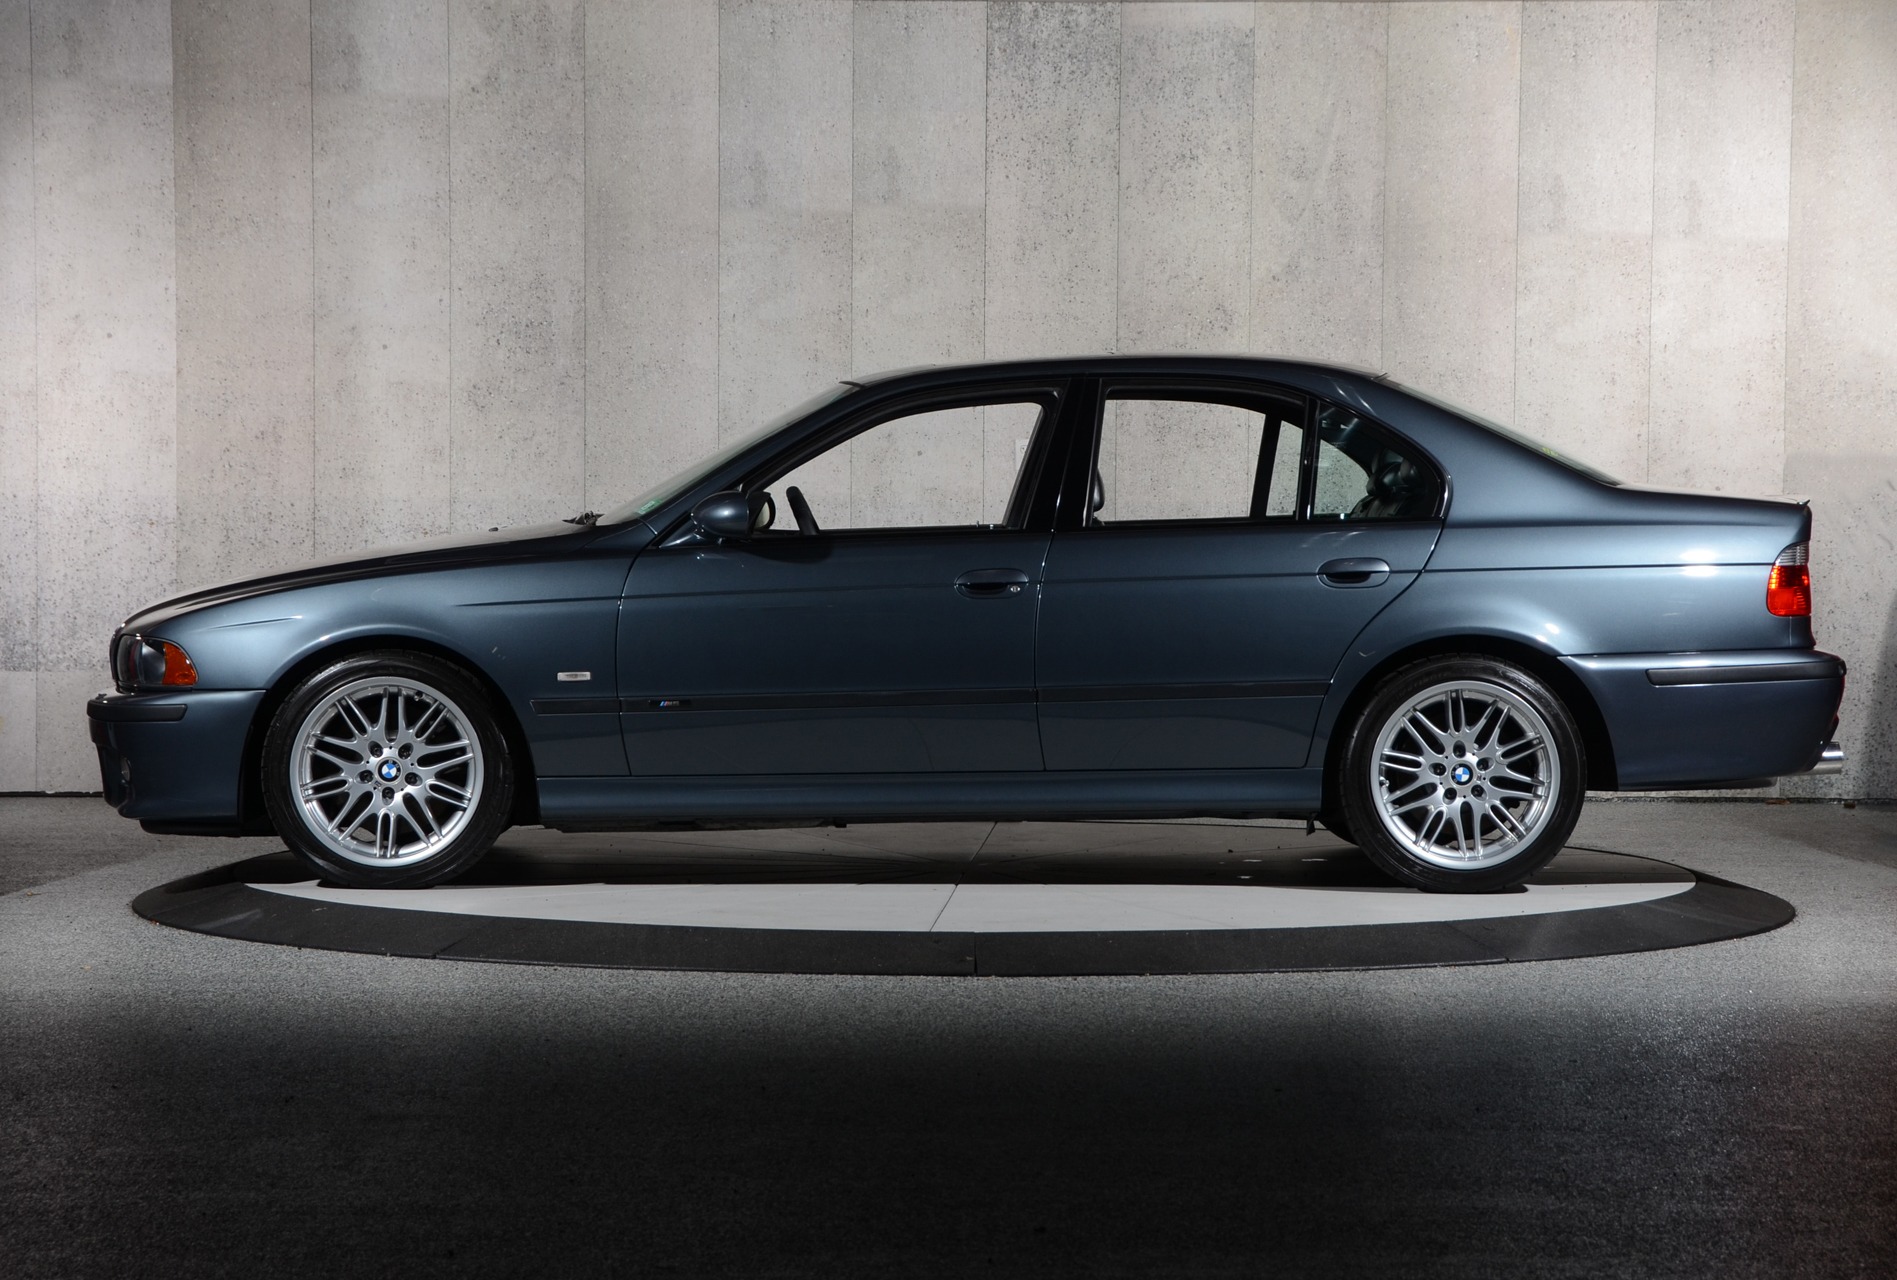 2000 BMW M5 Sedan Stock # 2000120 for sale near Plainview, NY